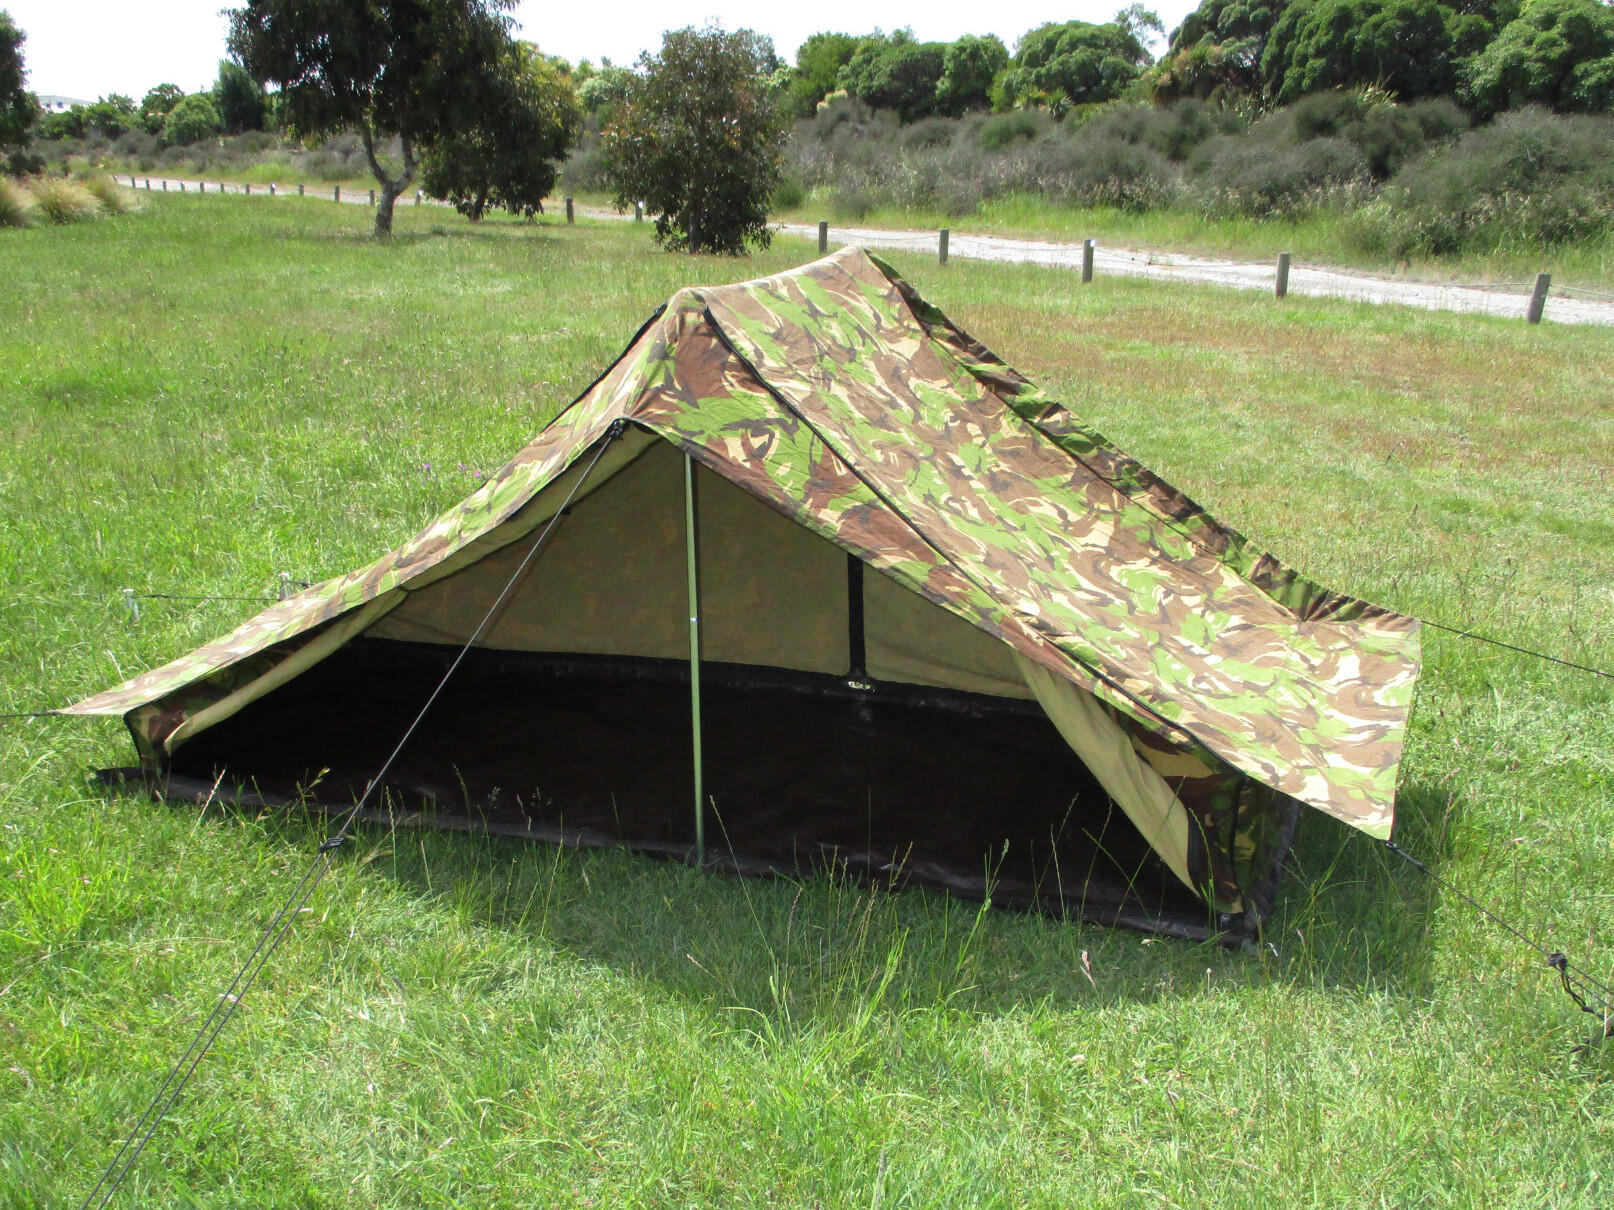 Dutch Army Dpm Camo 1-Man Tent - Army & Outdoors